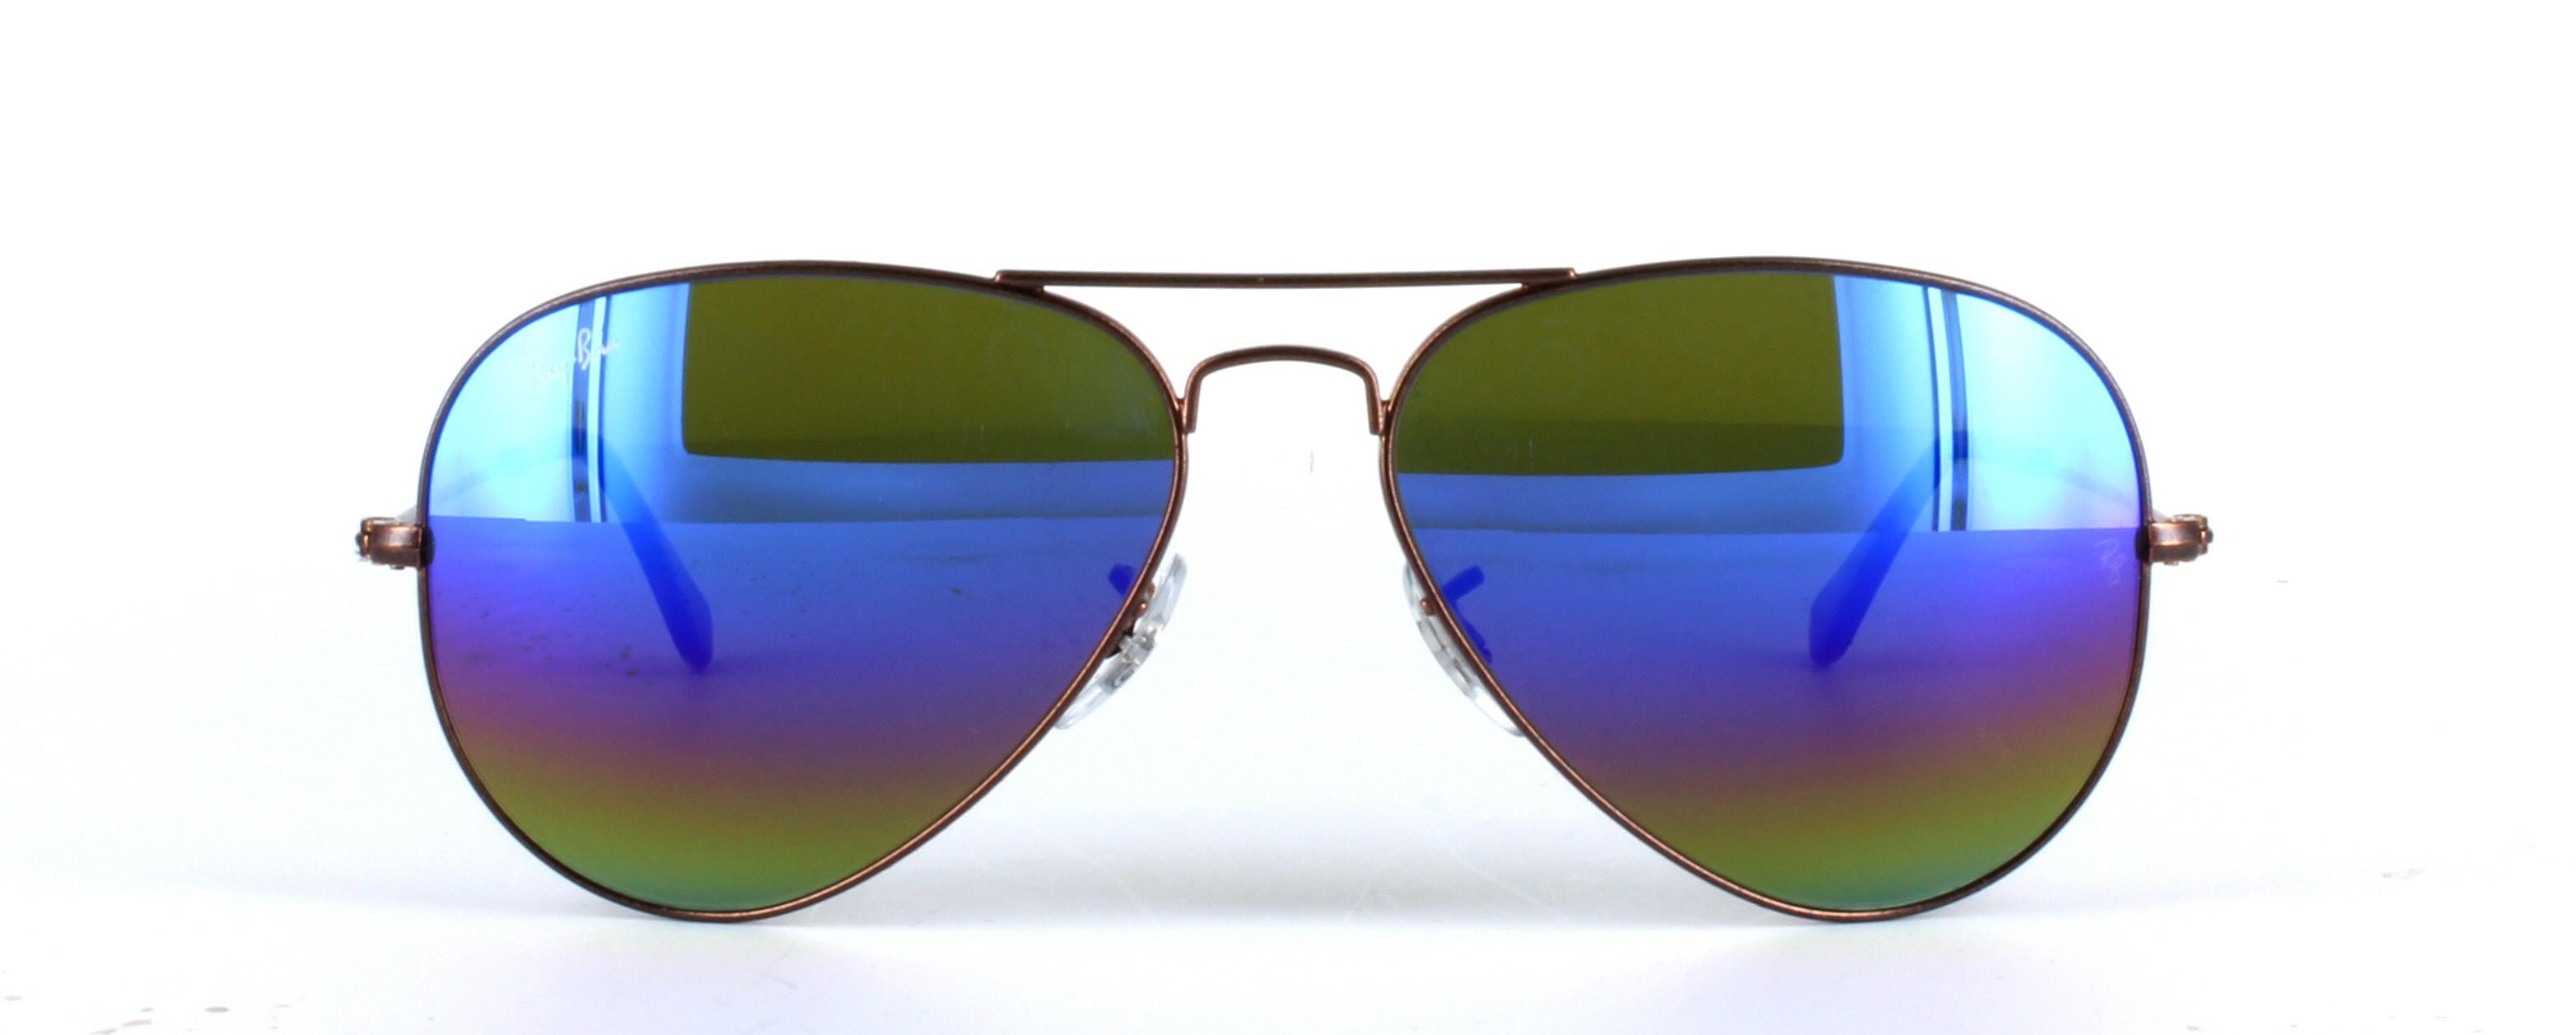 Ray Ban Aviator Prescription Sunglasses In Brown Cheap Glasses Online Glasses2you